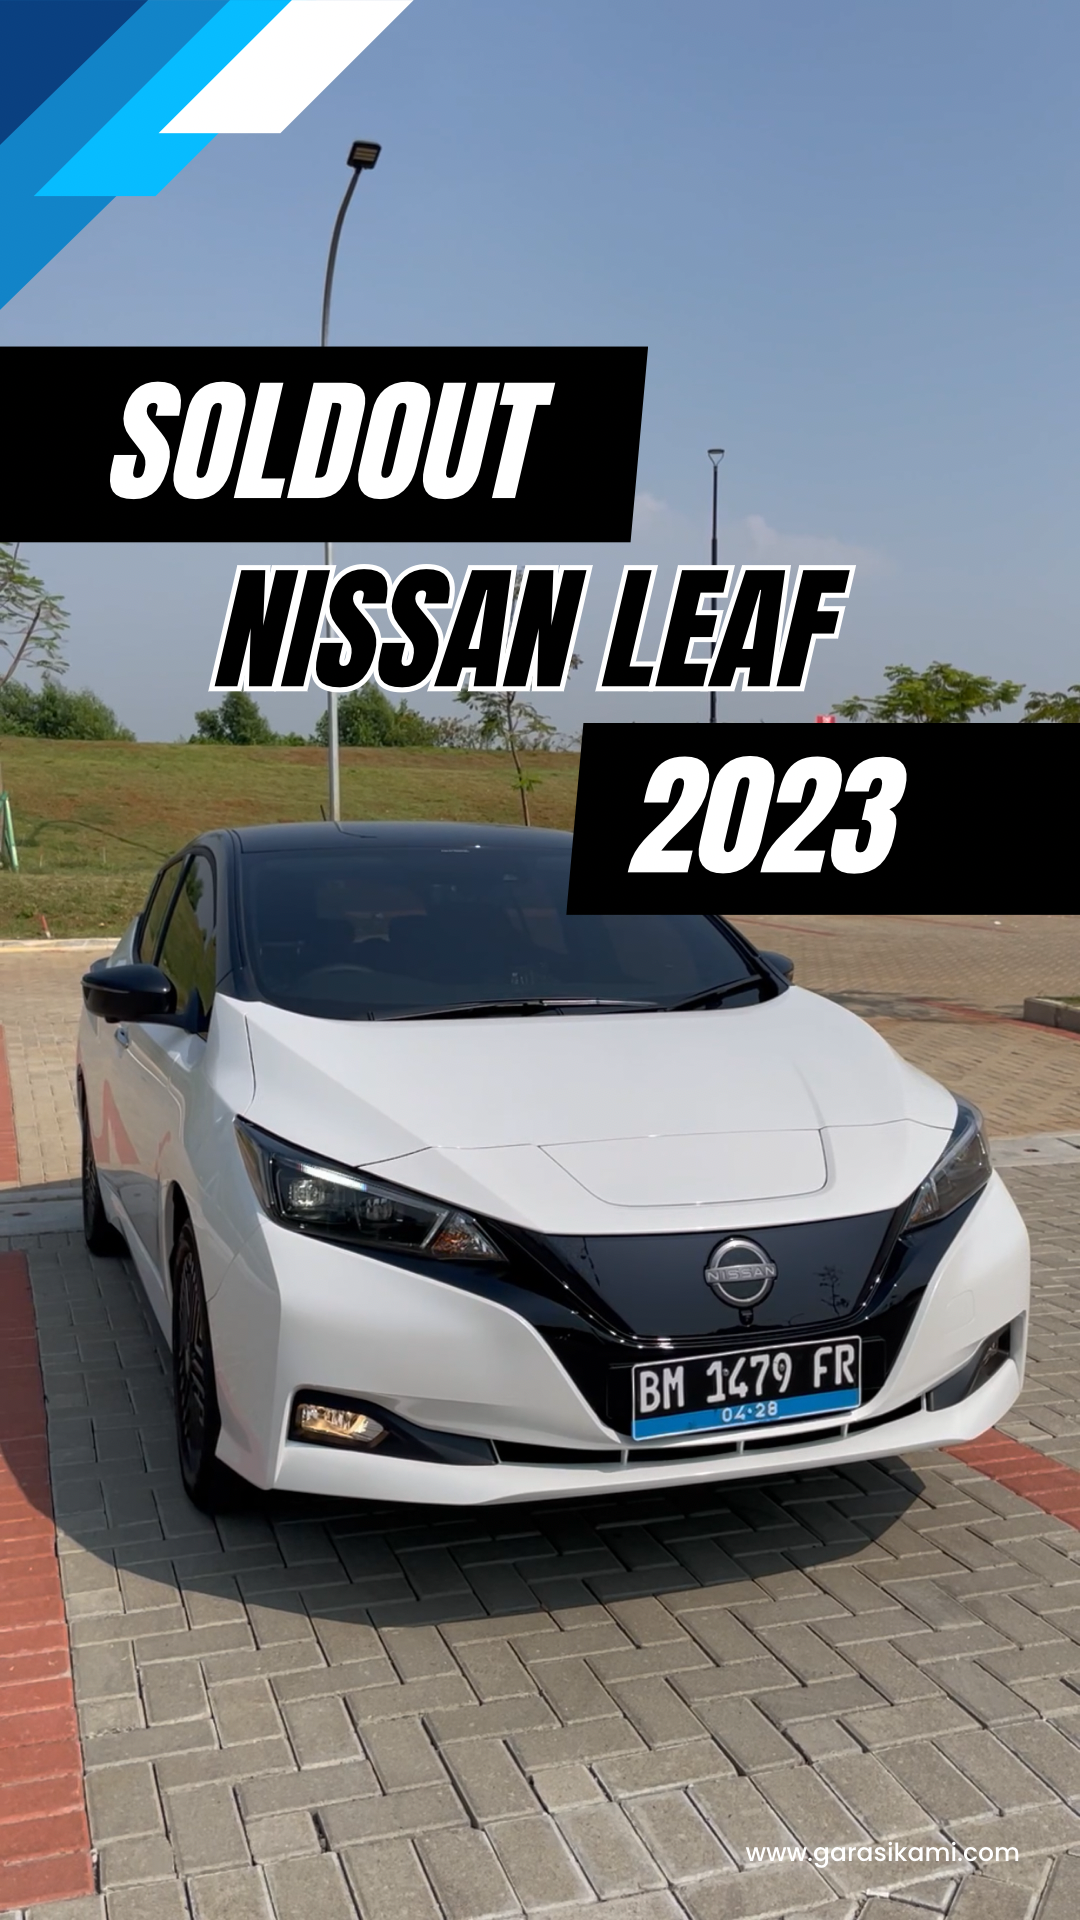 SOLD OUT Nissan Leaf 2023!